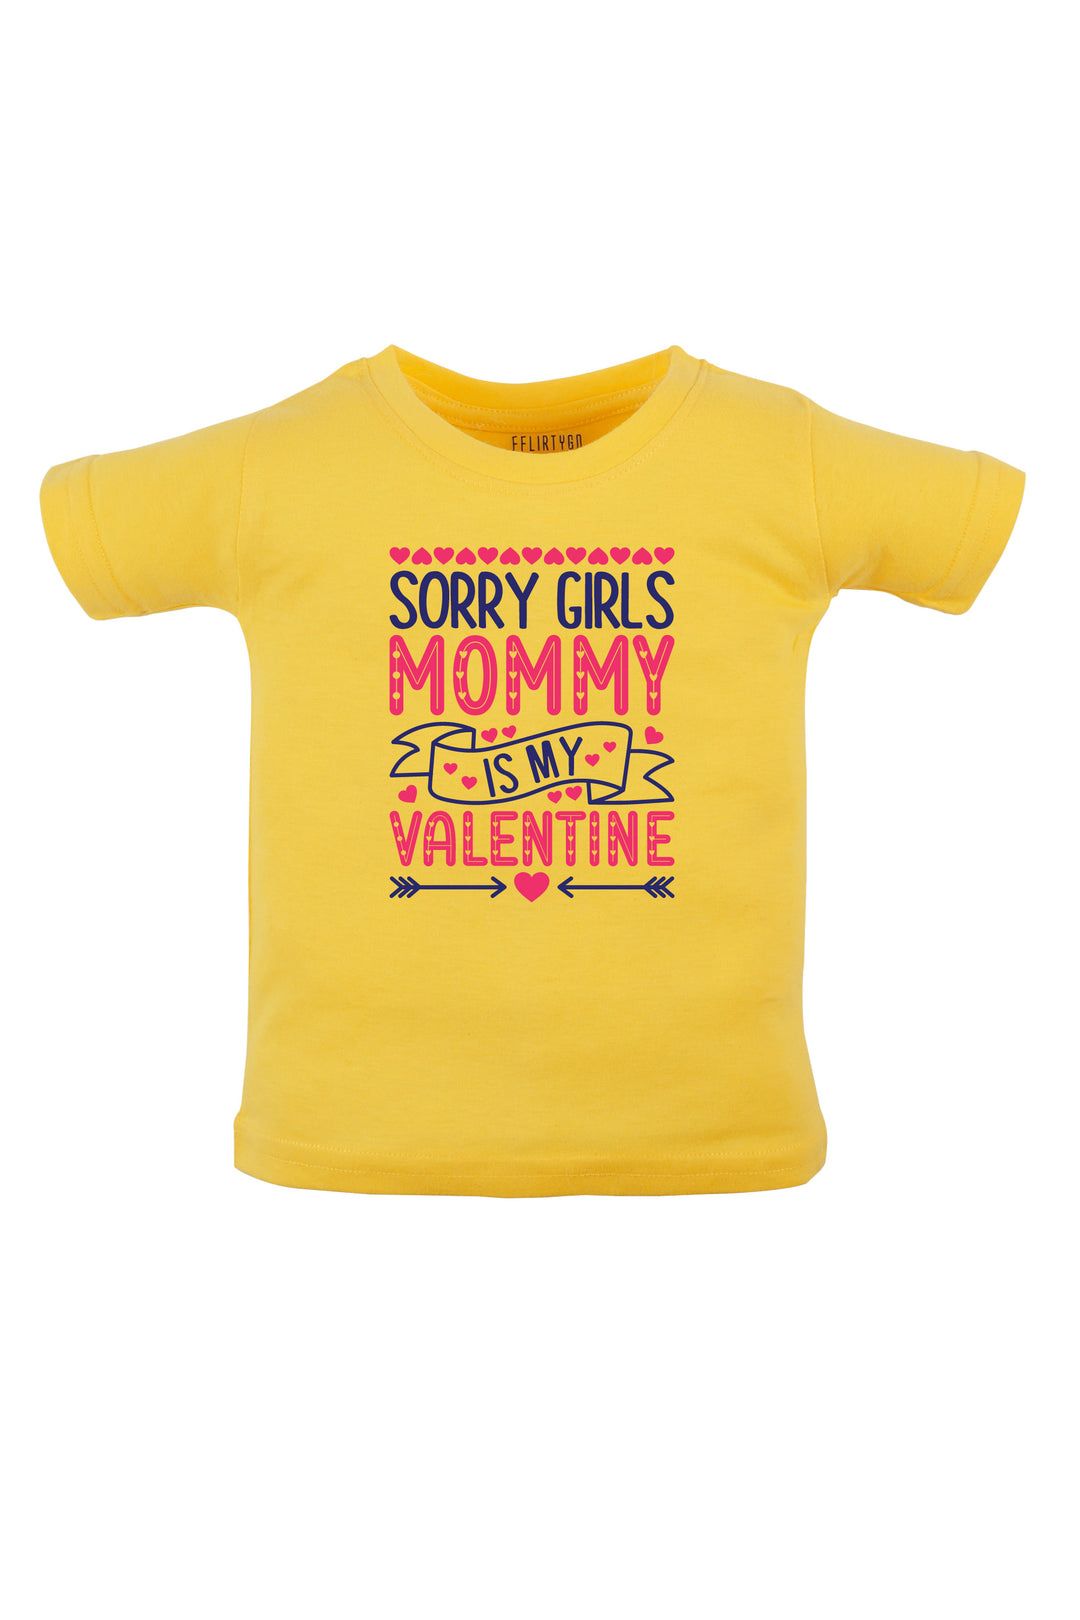 Sorry Girls Mommy Is My Valentine Kids T Shirt